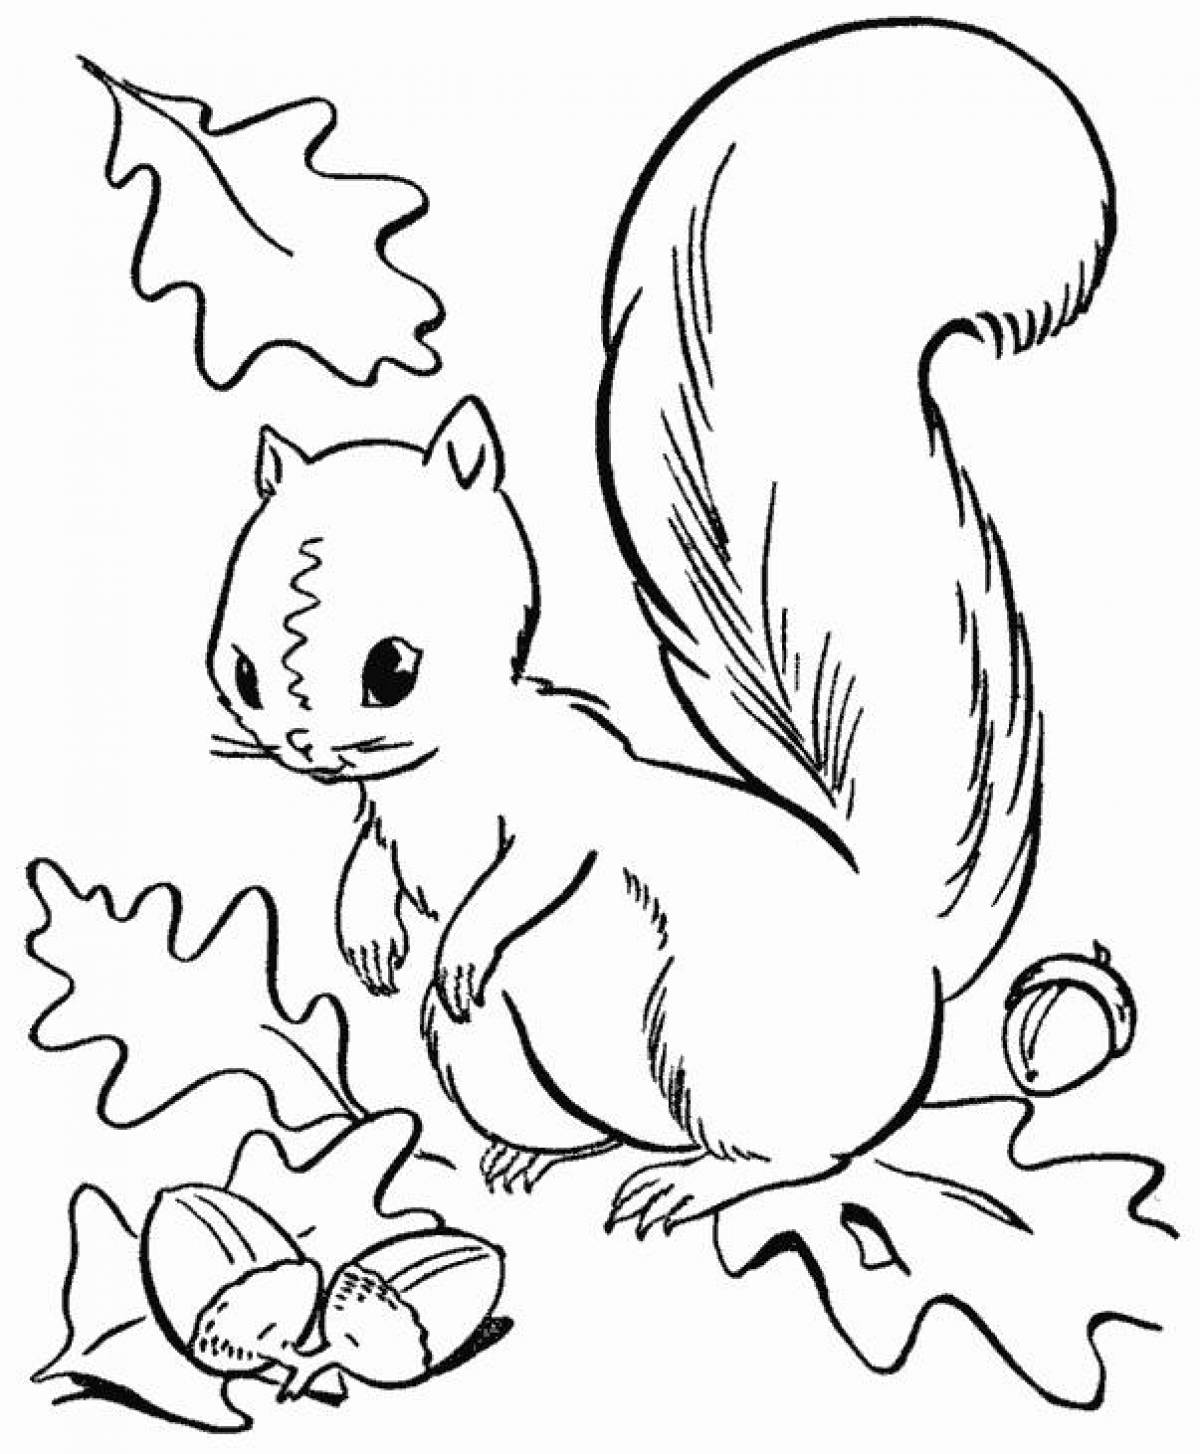 Squirrel magician